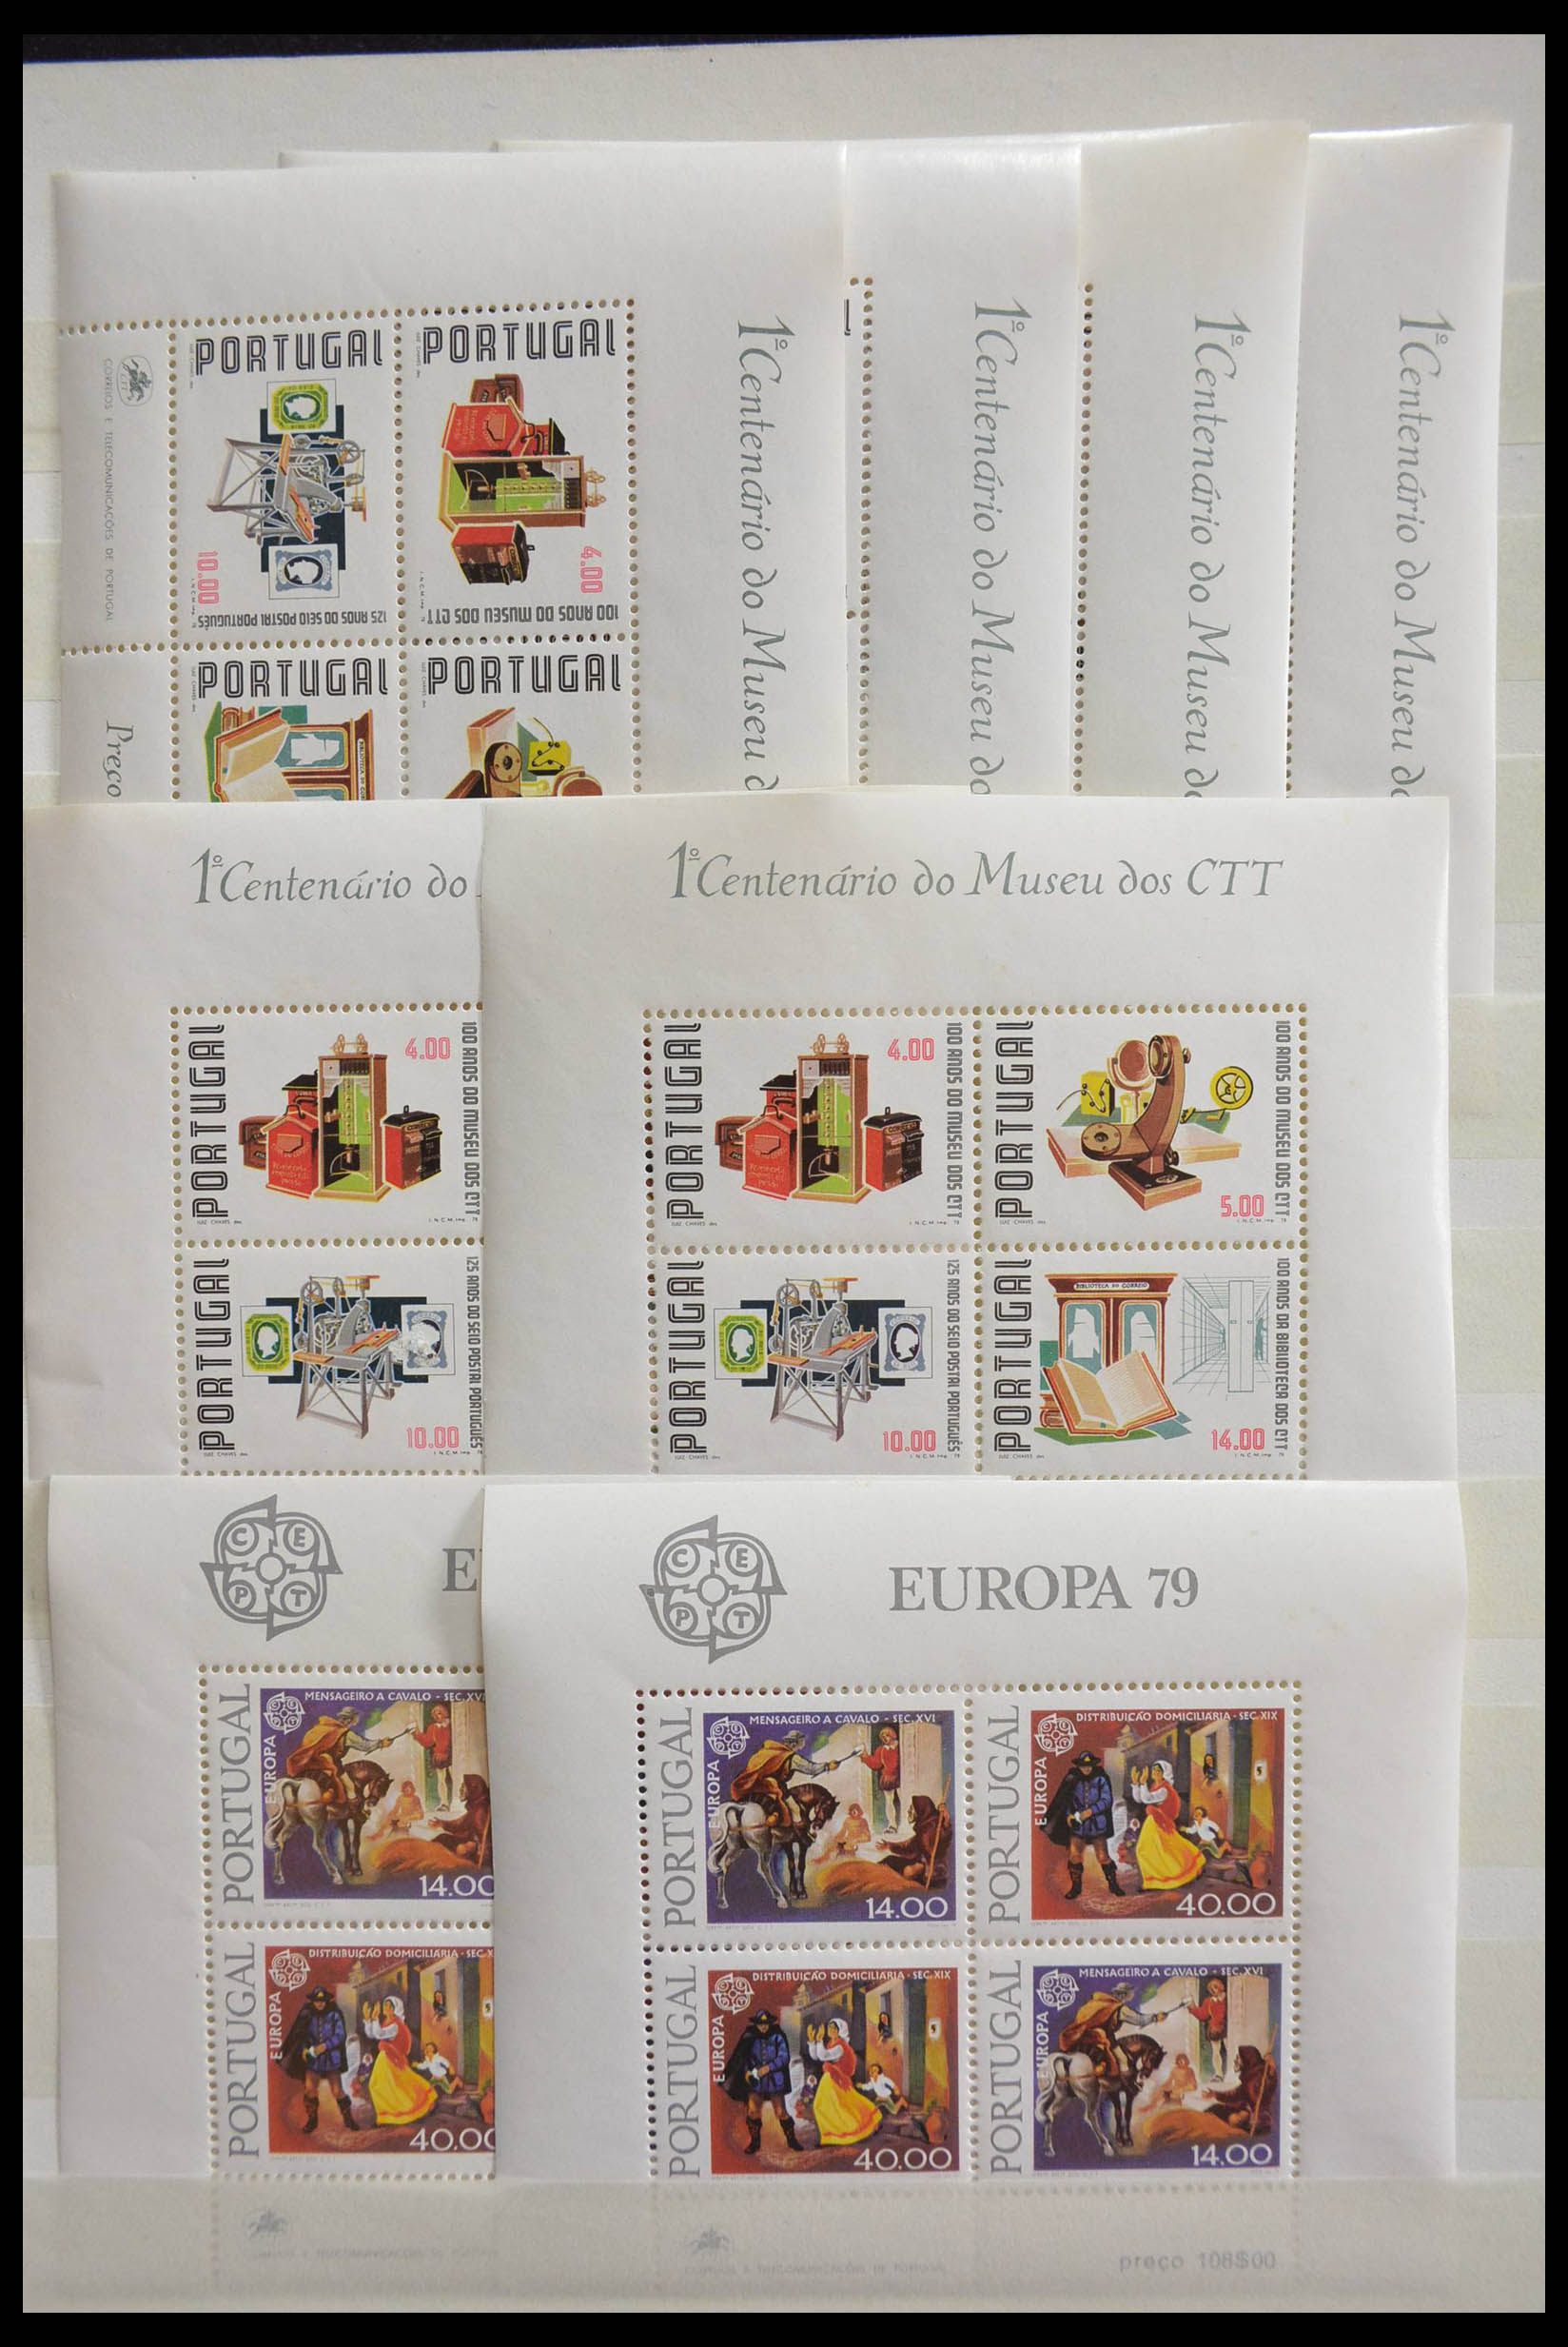 28540 025 - 28540 Portugal souvenir sheets.